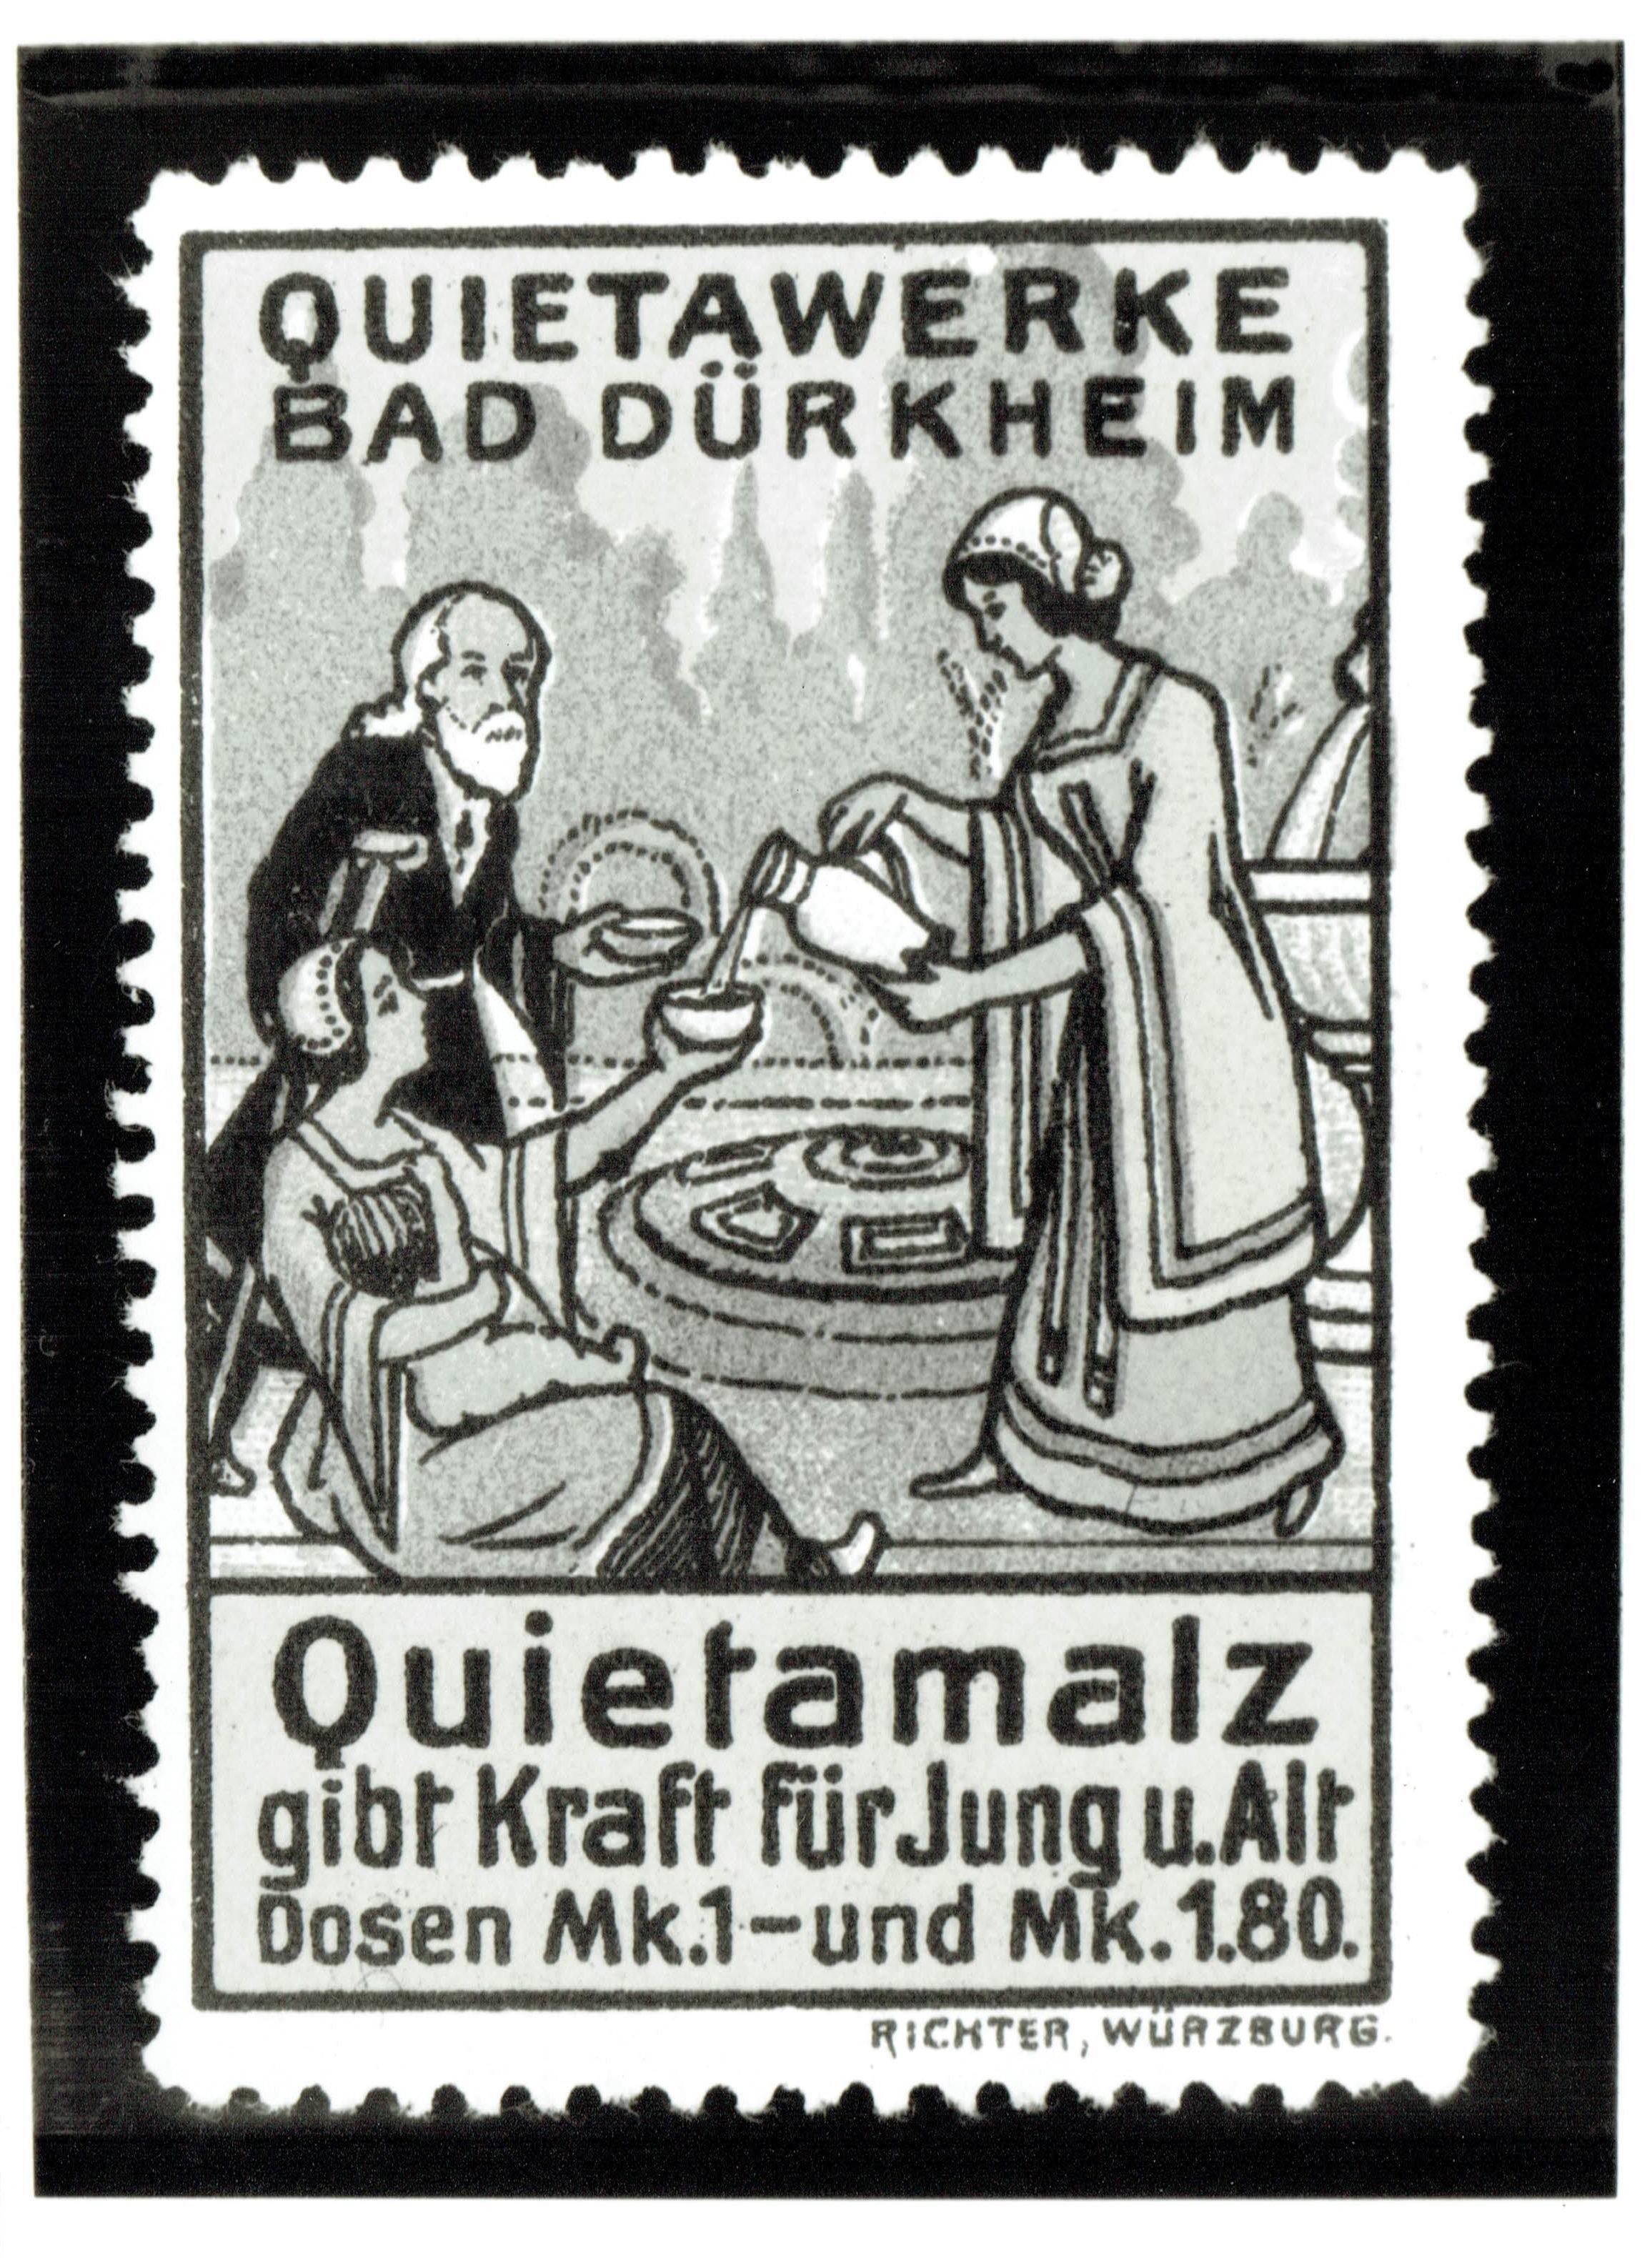 Foto-Sammlung Adolf Krapp, Ordner 8: Quieta, 1920 (Museumsgesellschaft Bad Dürkheim e.V. CC BY-NC-SA)